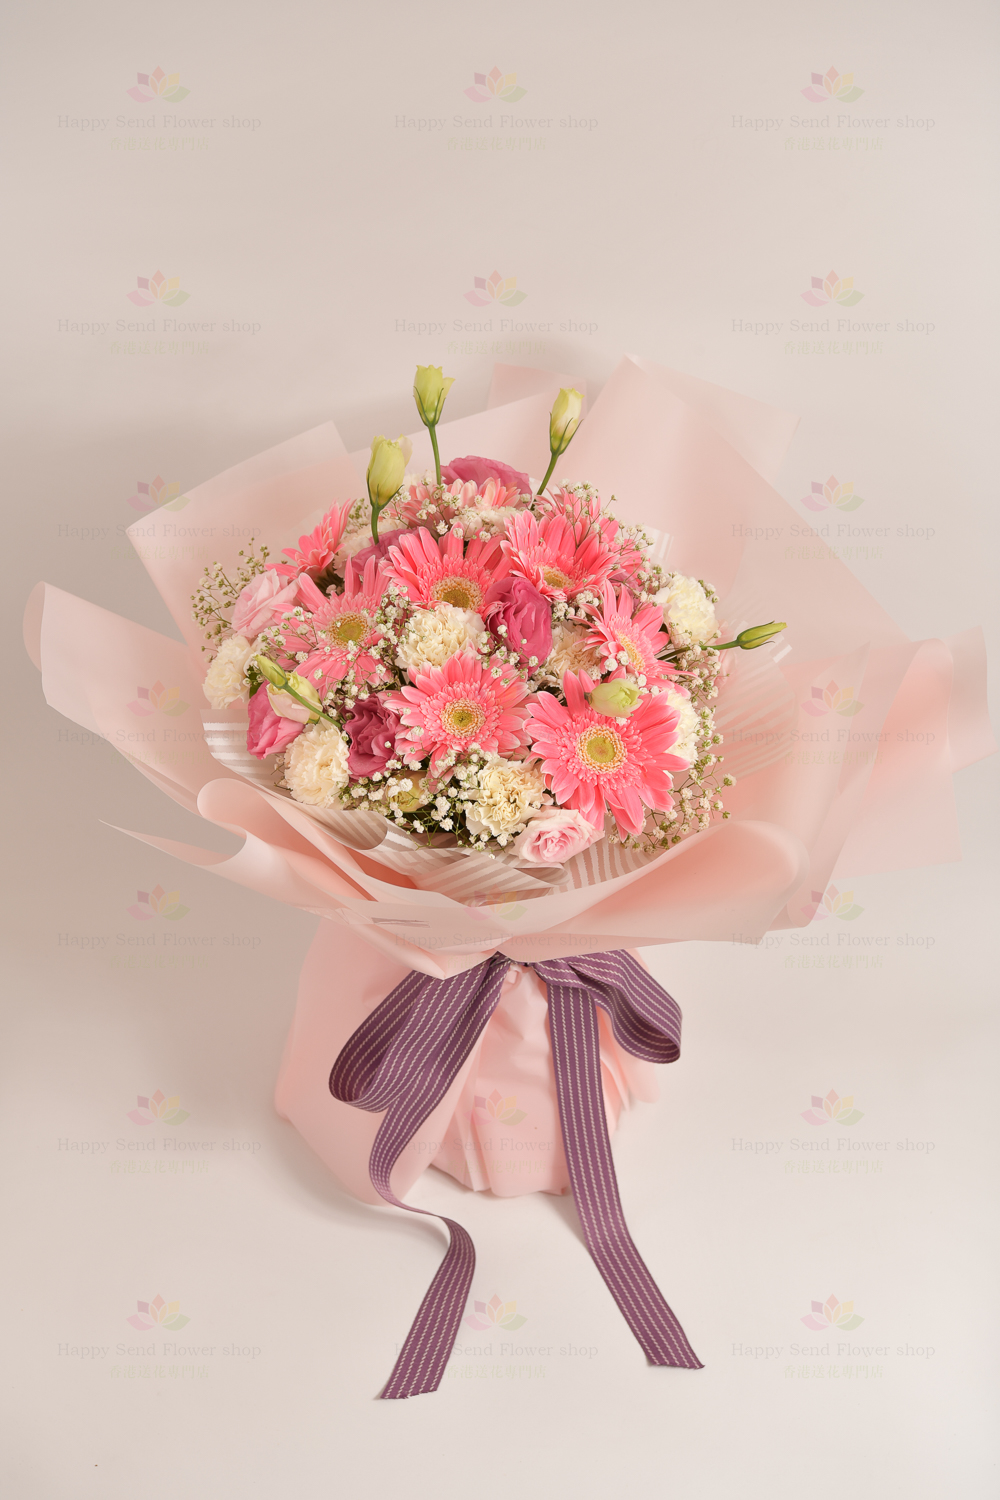 Warm and sweet (pink gerbera, white carnation, pink platycodon, white gypsophila)